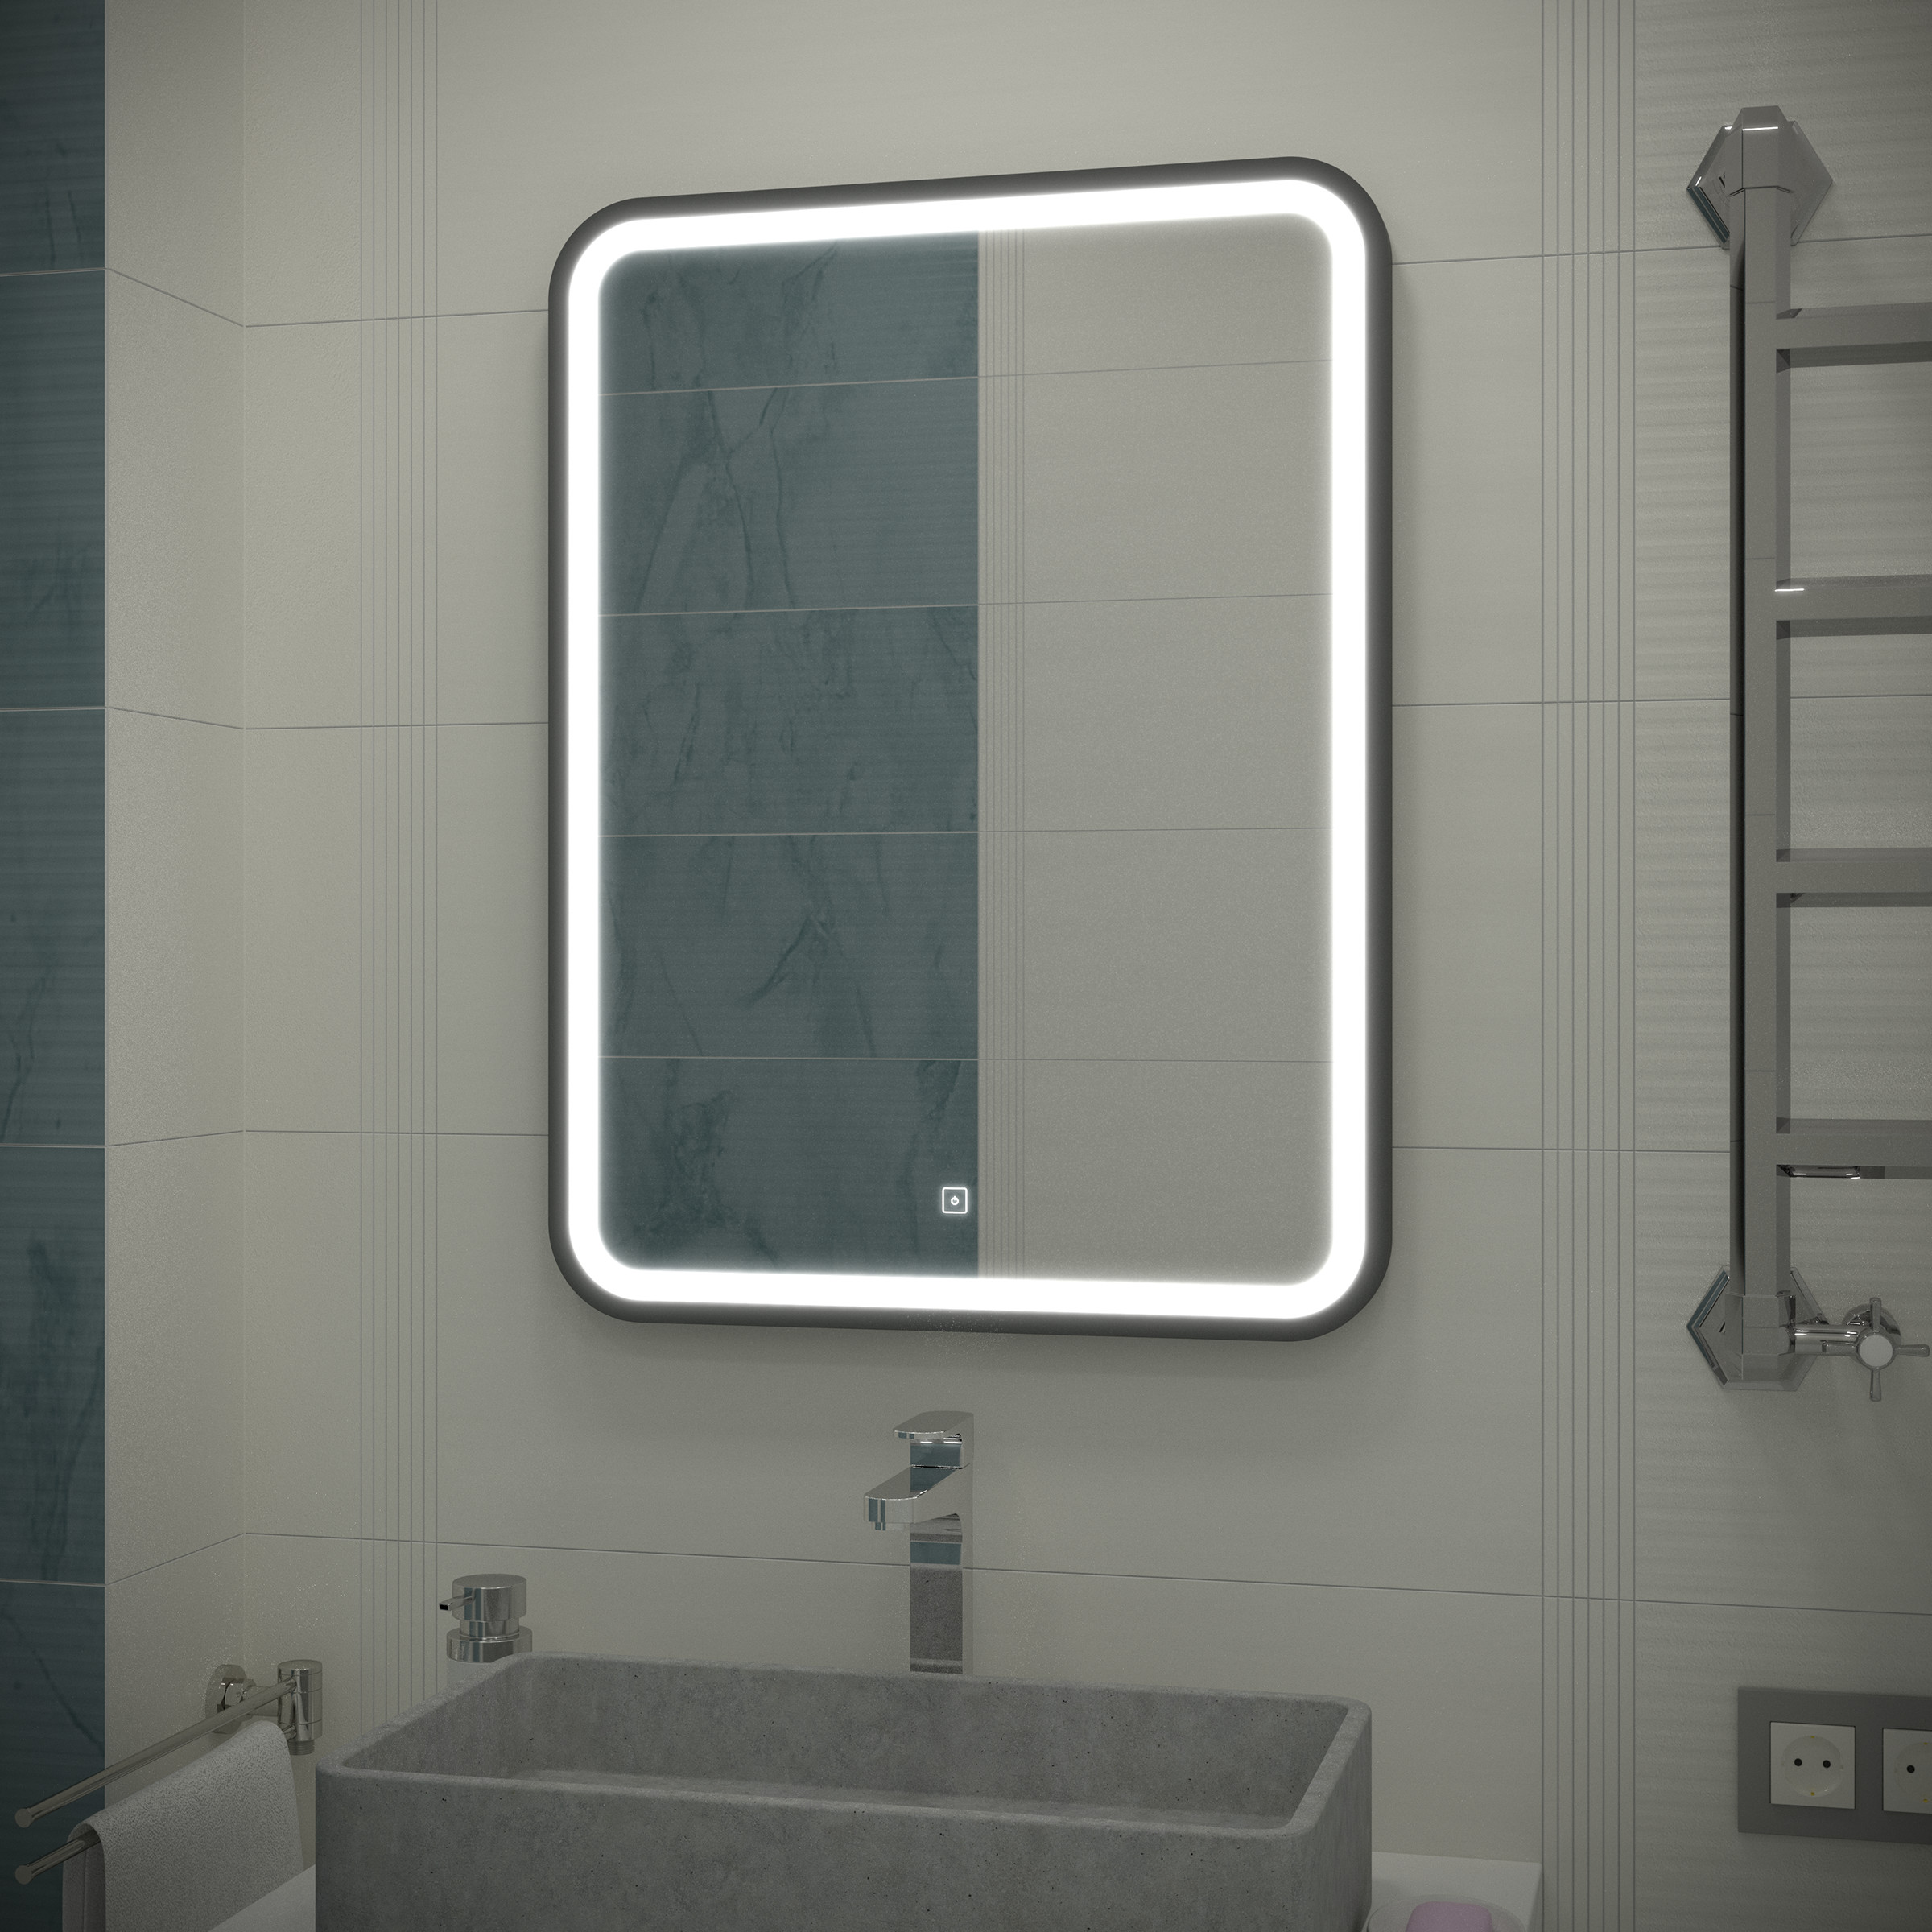 Леруа мерлен зеркало с подсветкой в ванную. Simple Gray led 60x80. Зеркало enjoy Black led 600х800. Зеркало с подсветкой simple Gray led 60x80. Зеркало led Grace с подсветкой 60х60 с димерлм.